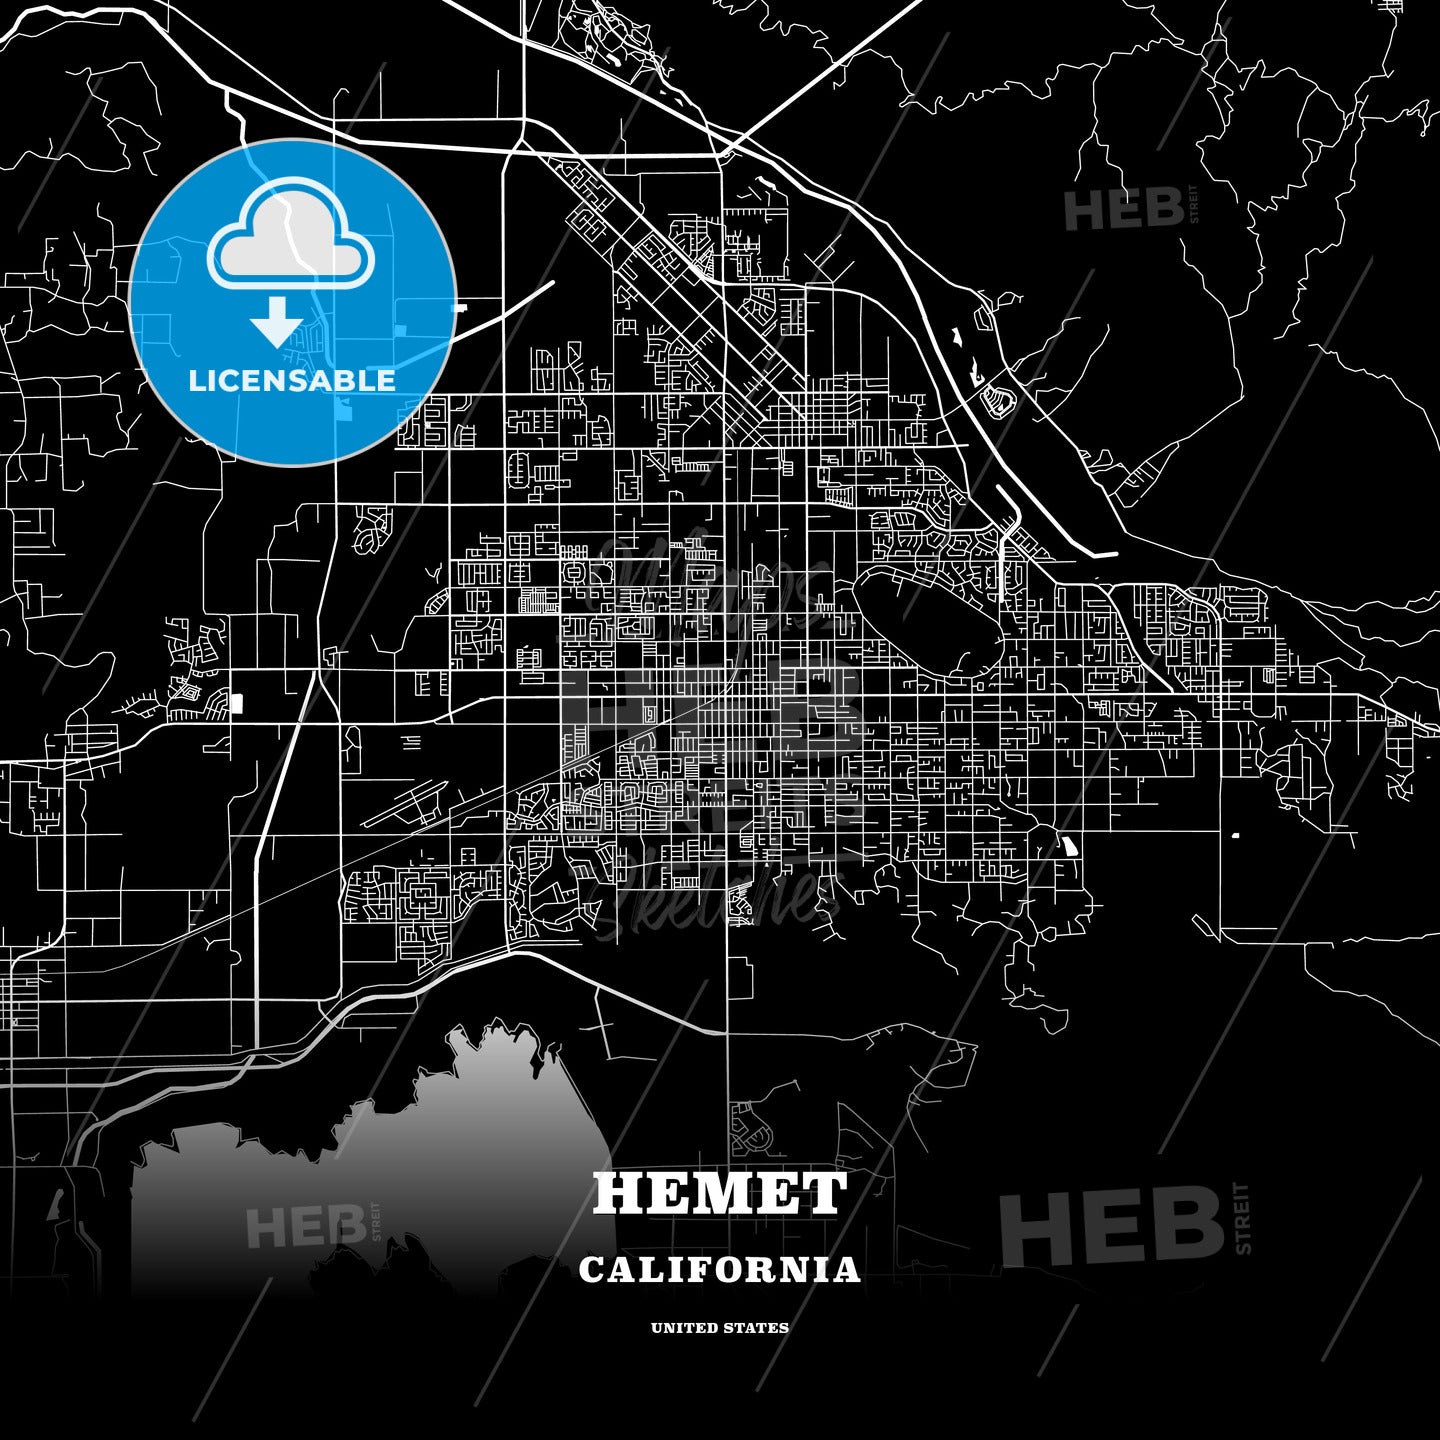 Hemet, California, USA map